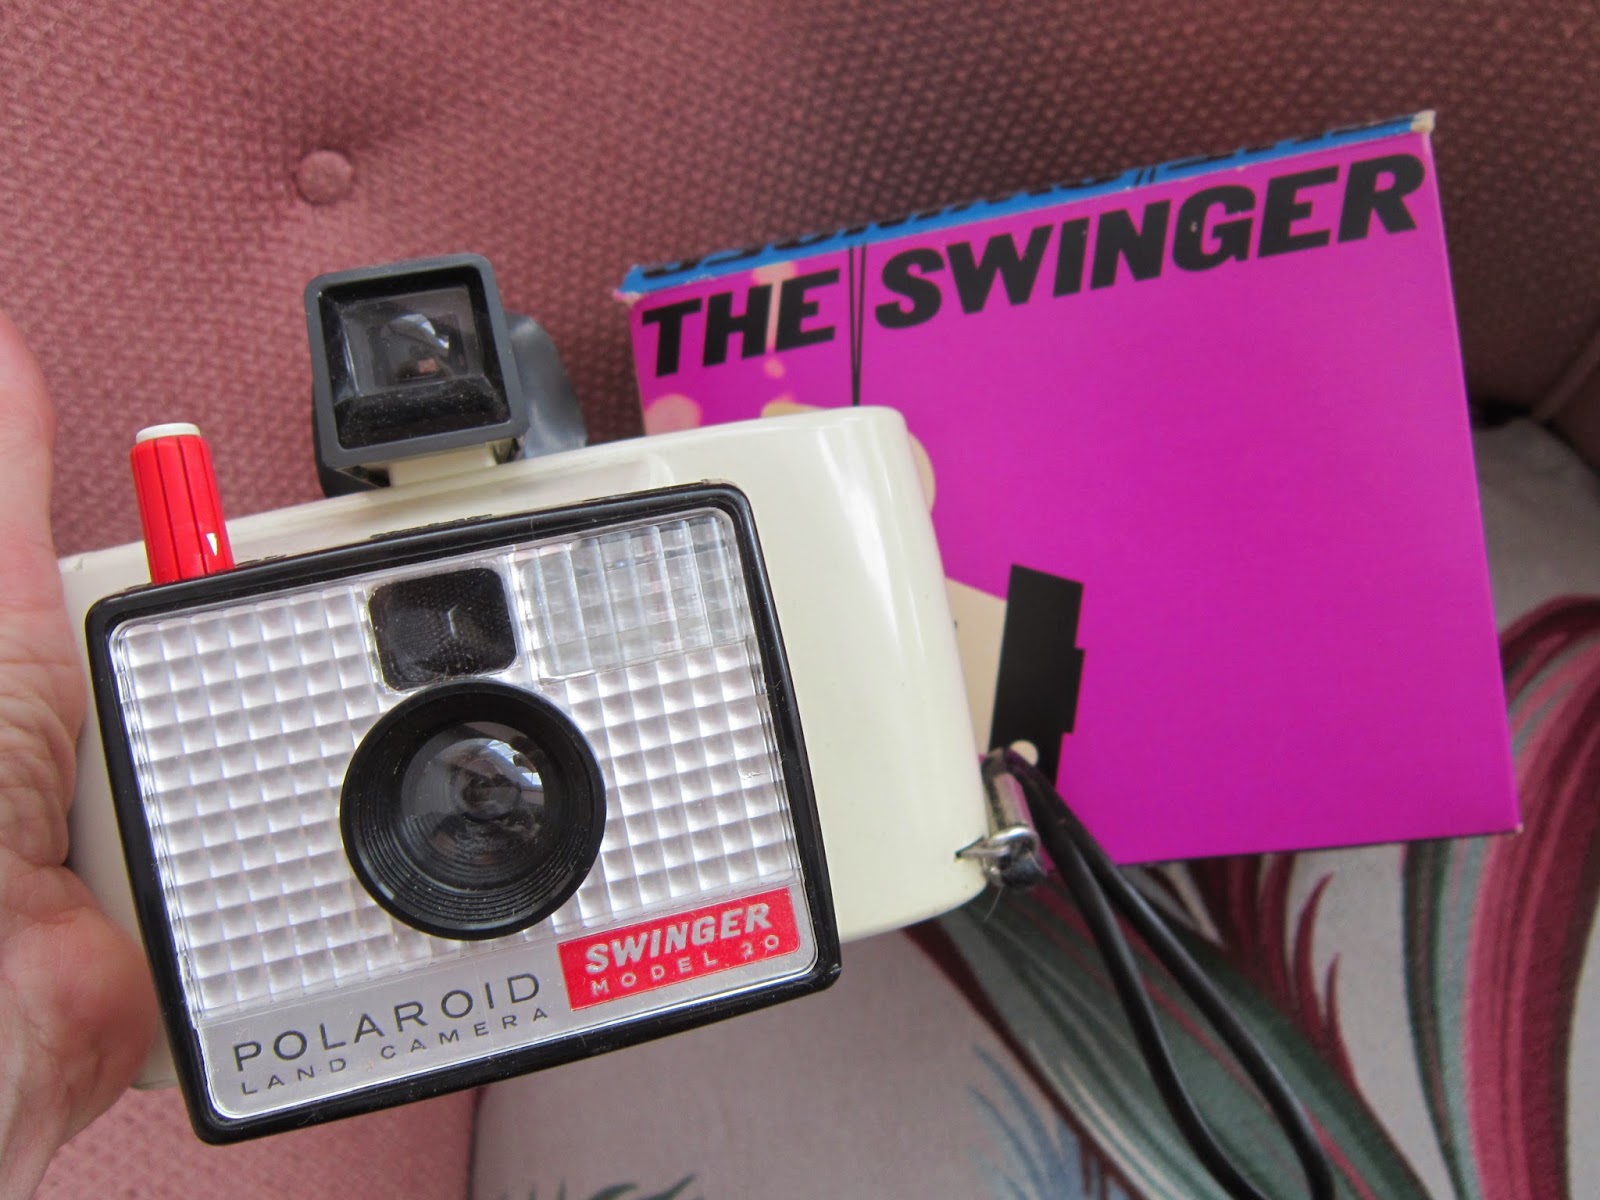 meet the swinger the polaroid